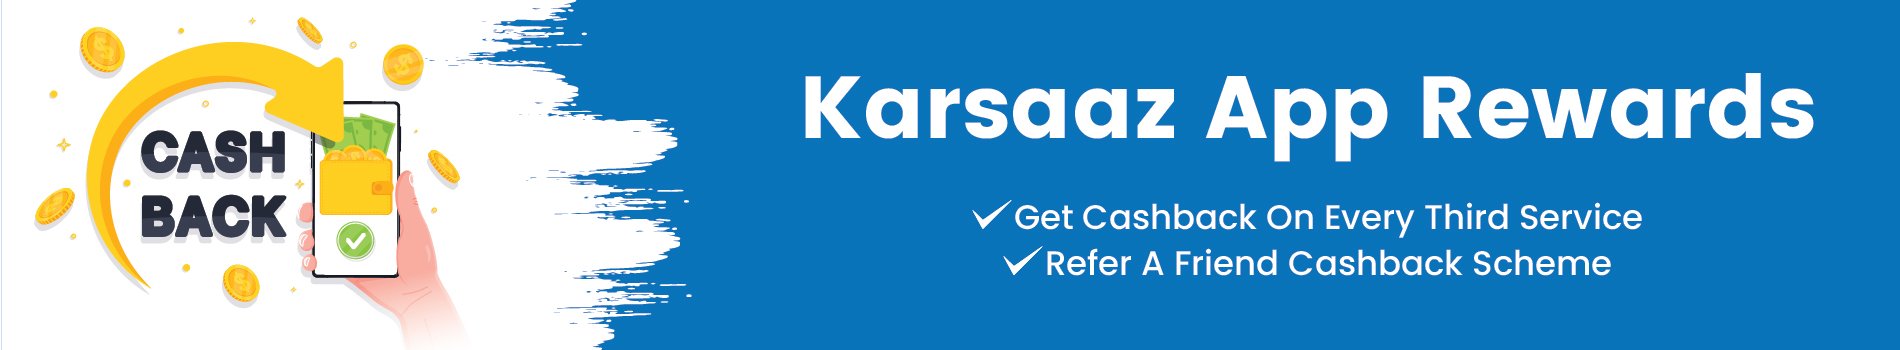 cashback rewards karsaaz